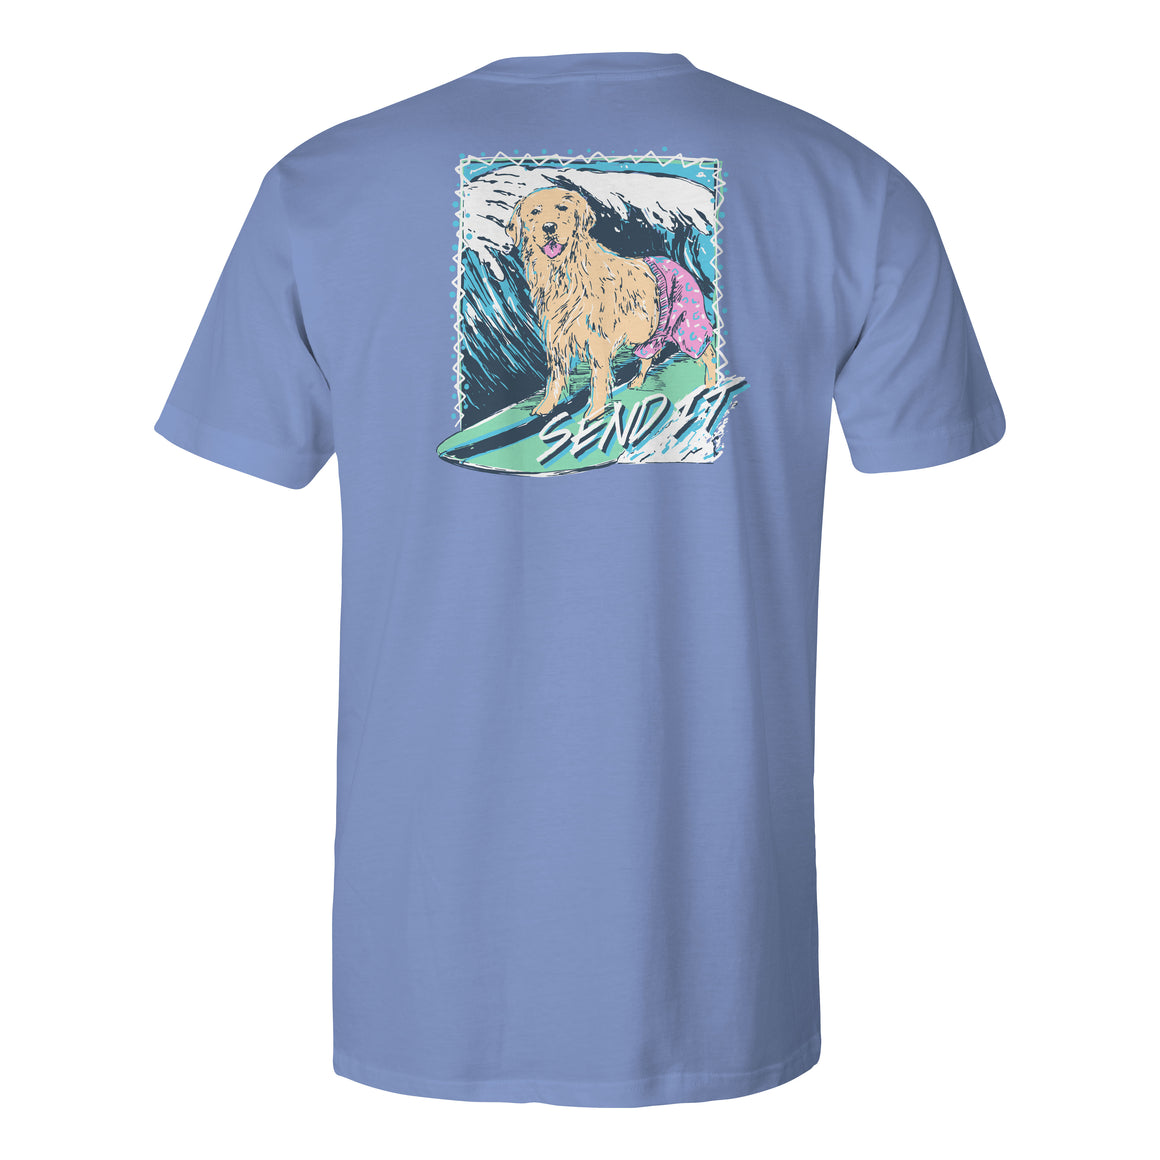 Youth & Toddler Short Sleeve T shirt - Send It Surf - Dusk